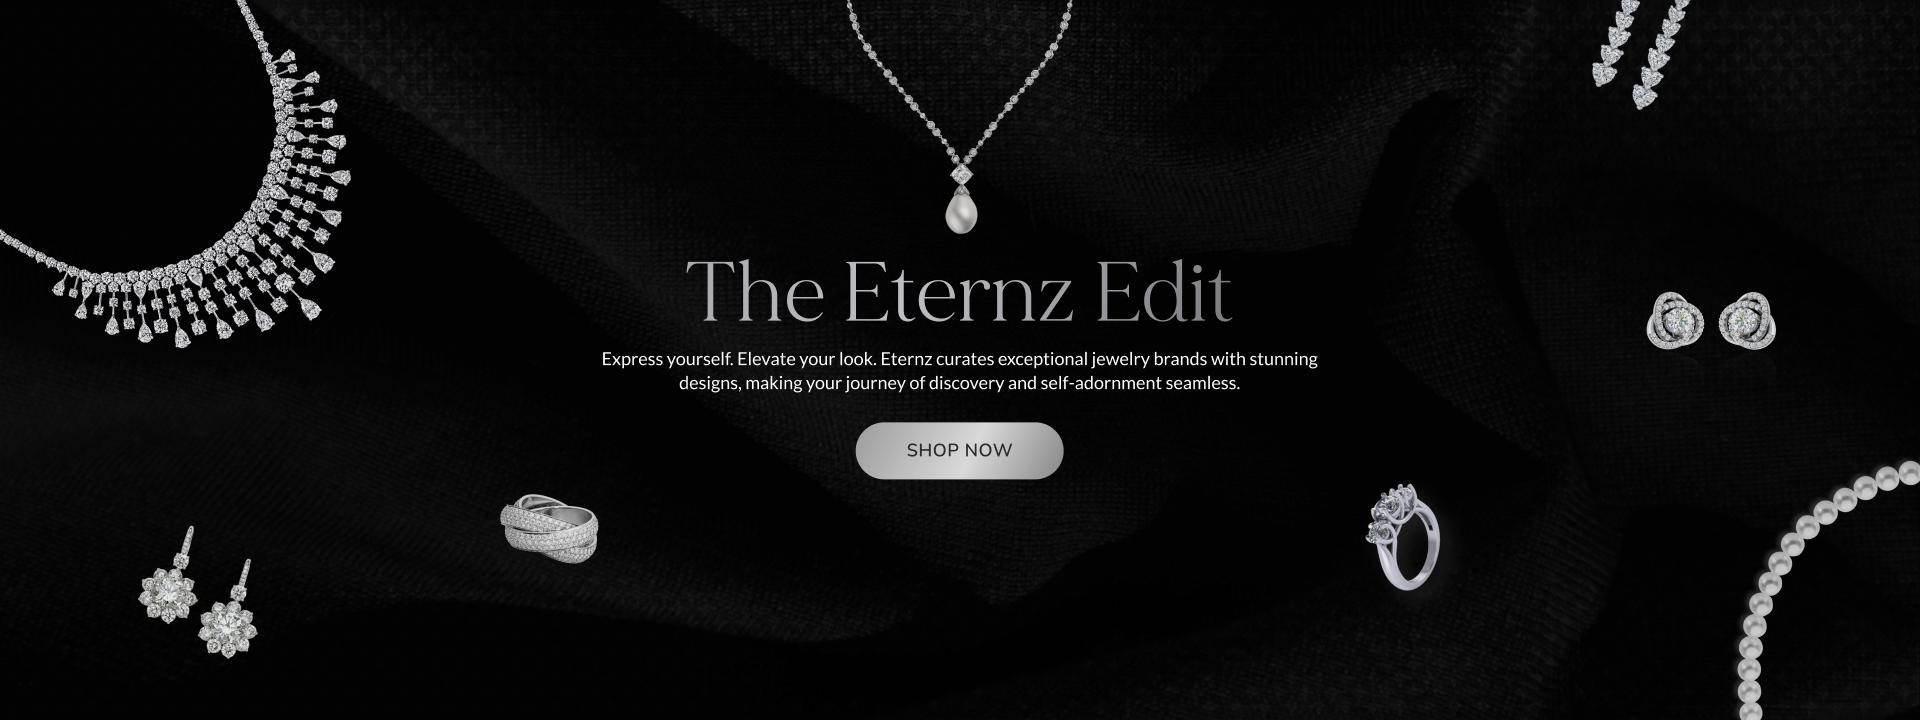 Buy Jewelry at Eternz